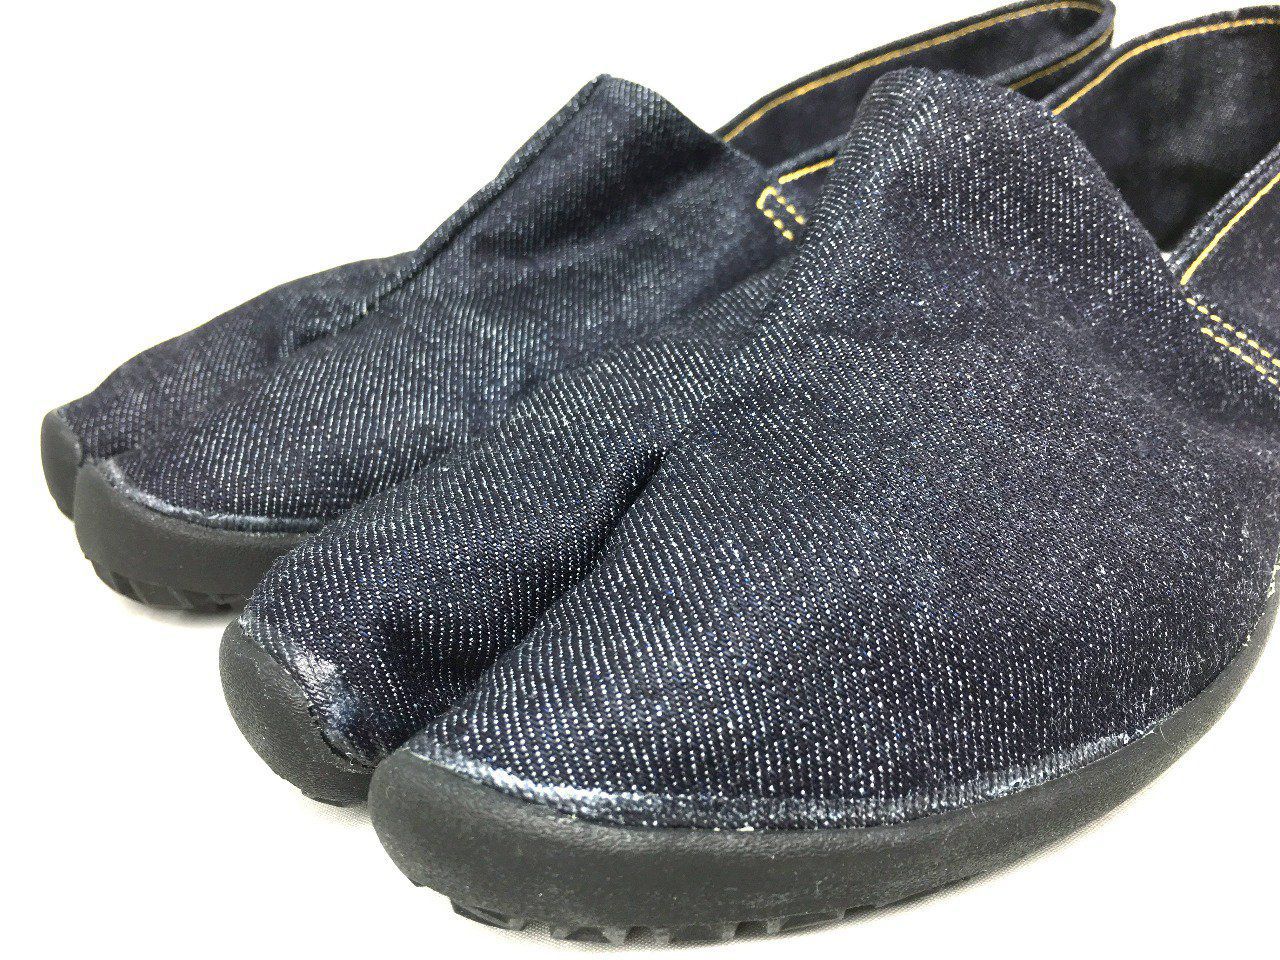 Luxe Chaussure Jikatabi TabiRela Denim Marugo homme Taille 28cm "Made in Kurashiki Japan" 